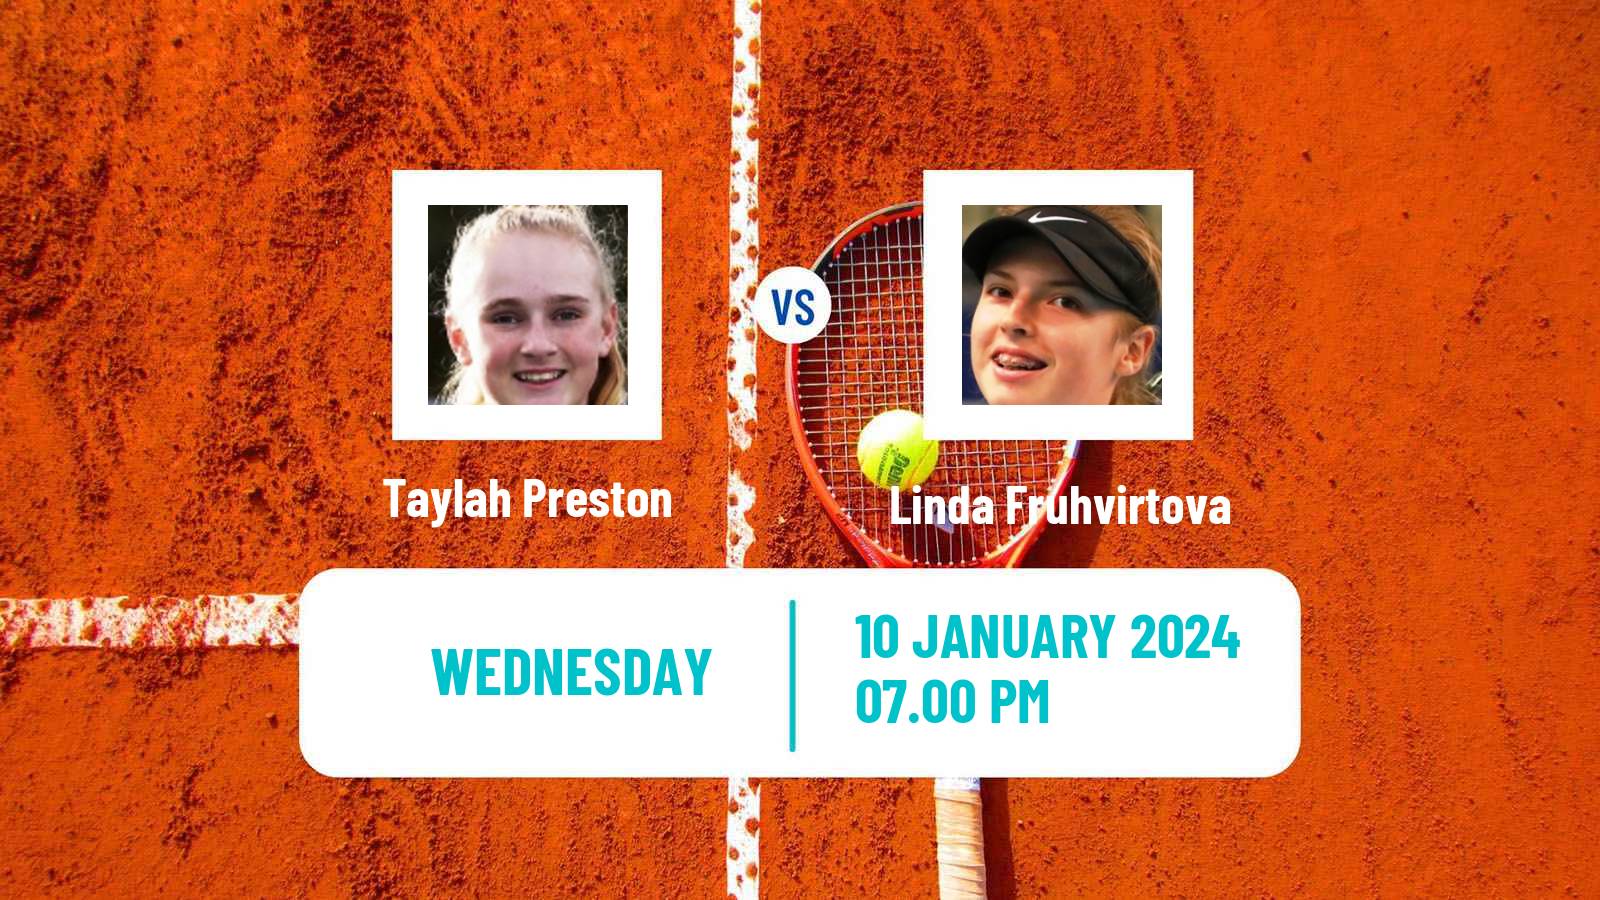 Tennis Exhibition Others Matches Tennis Women Taylah Preston - Linda Fruhvirtova